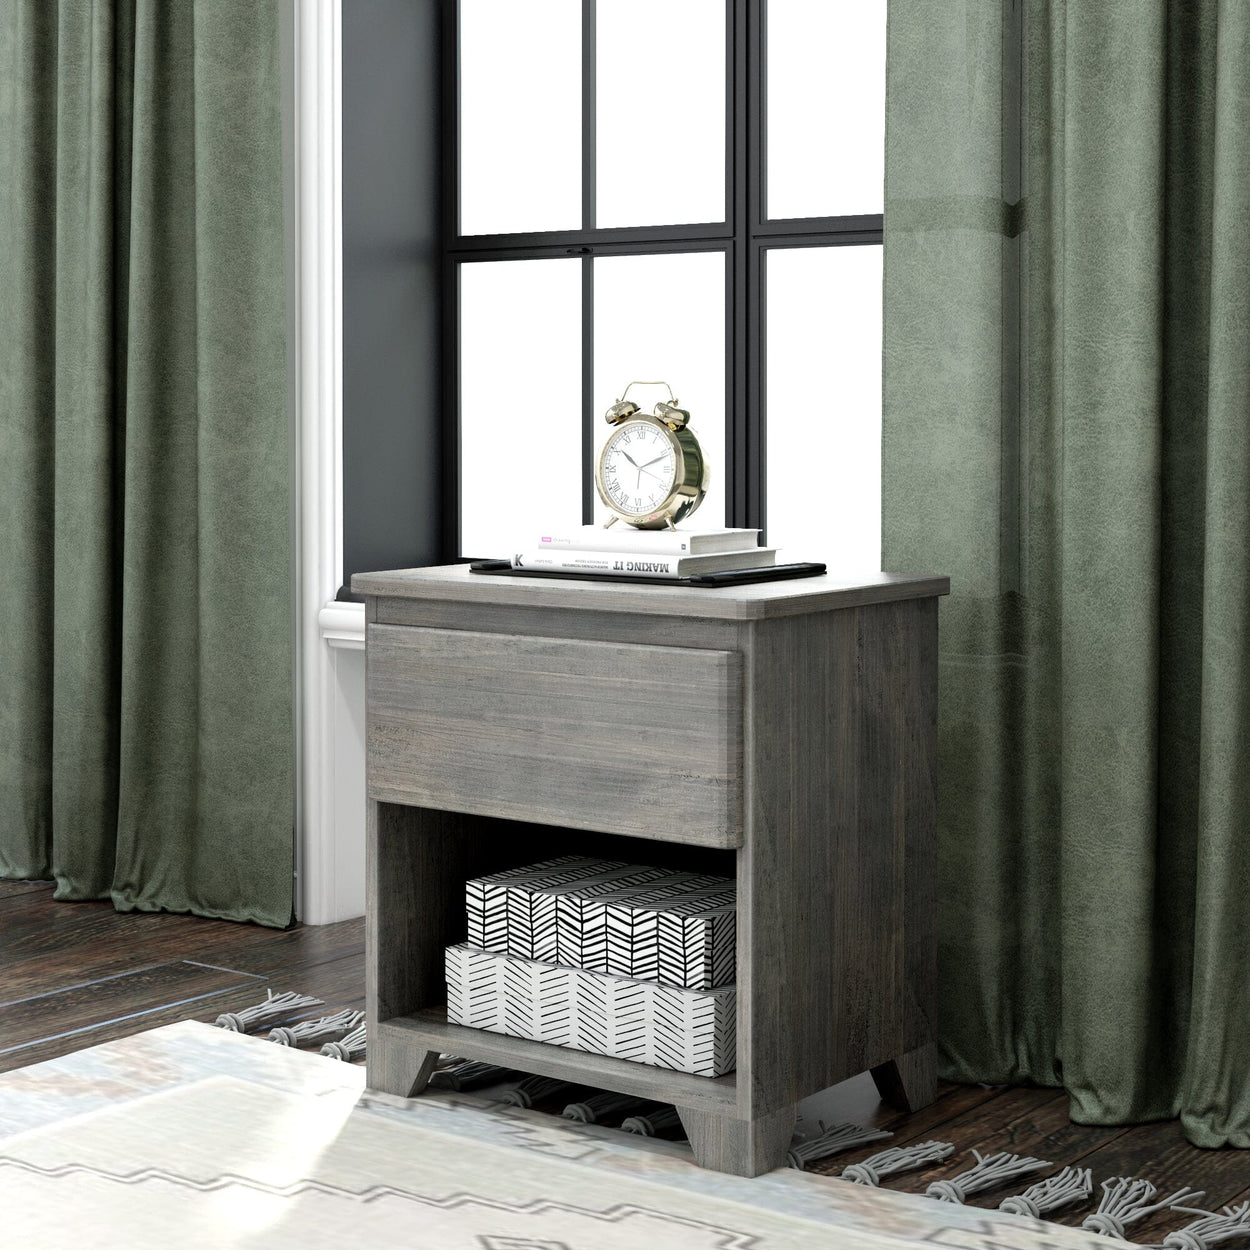 190001-185 : Furniture K/D 1 Drawer Nightstand w/ metal drawer glides (22"L x 15.75"W x 23.75"H), Driftwood